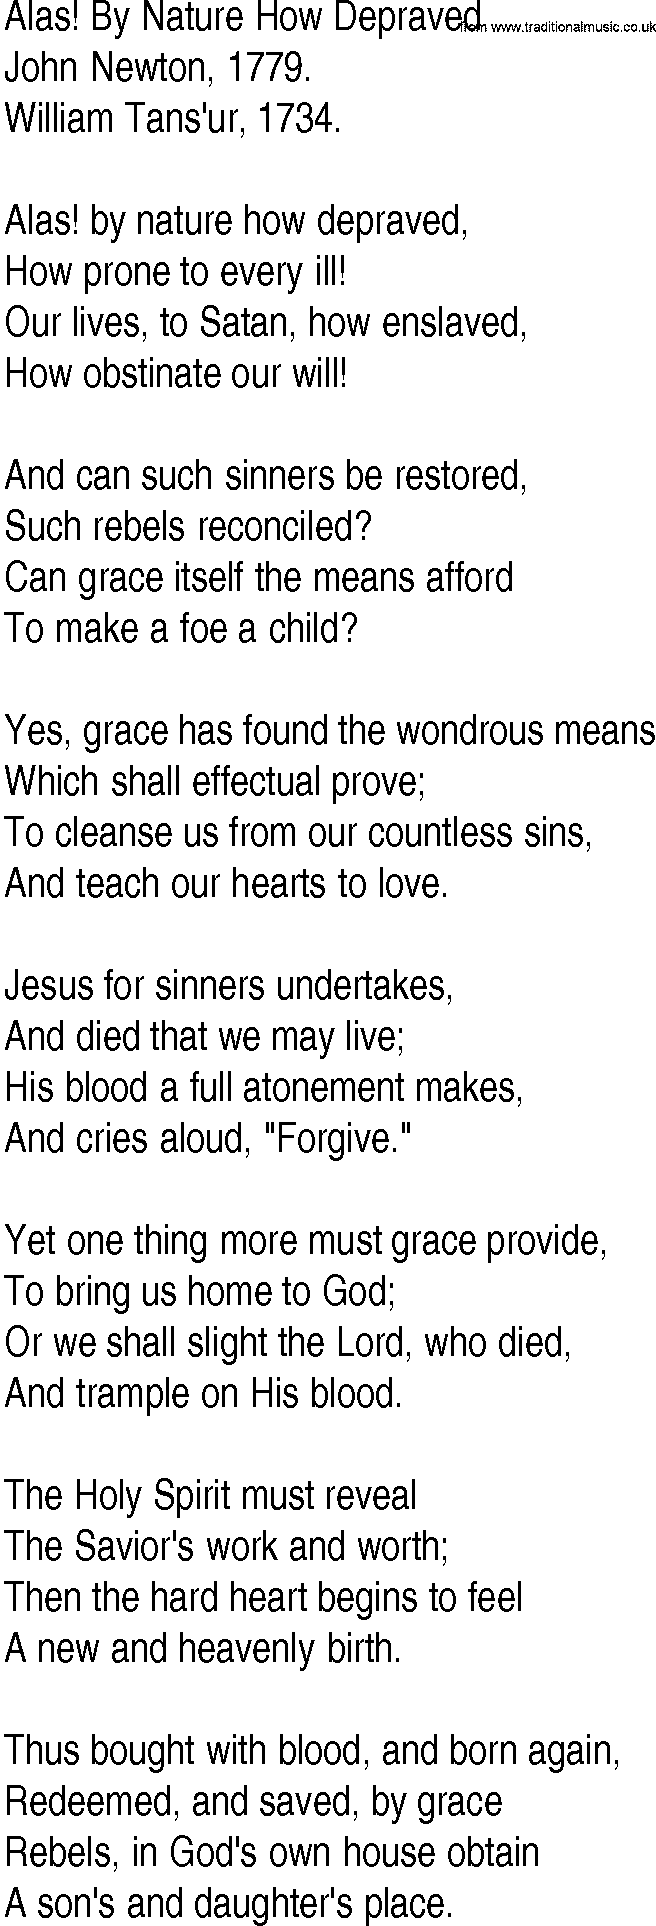 Hymn and Gospel Song: Alas! By Nature How Depraved by John Newton lyrics